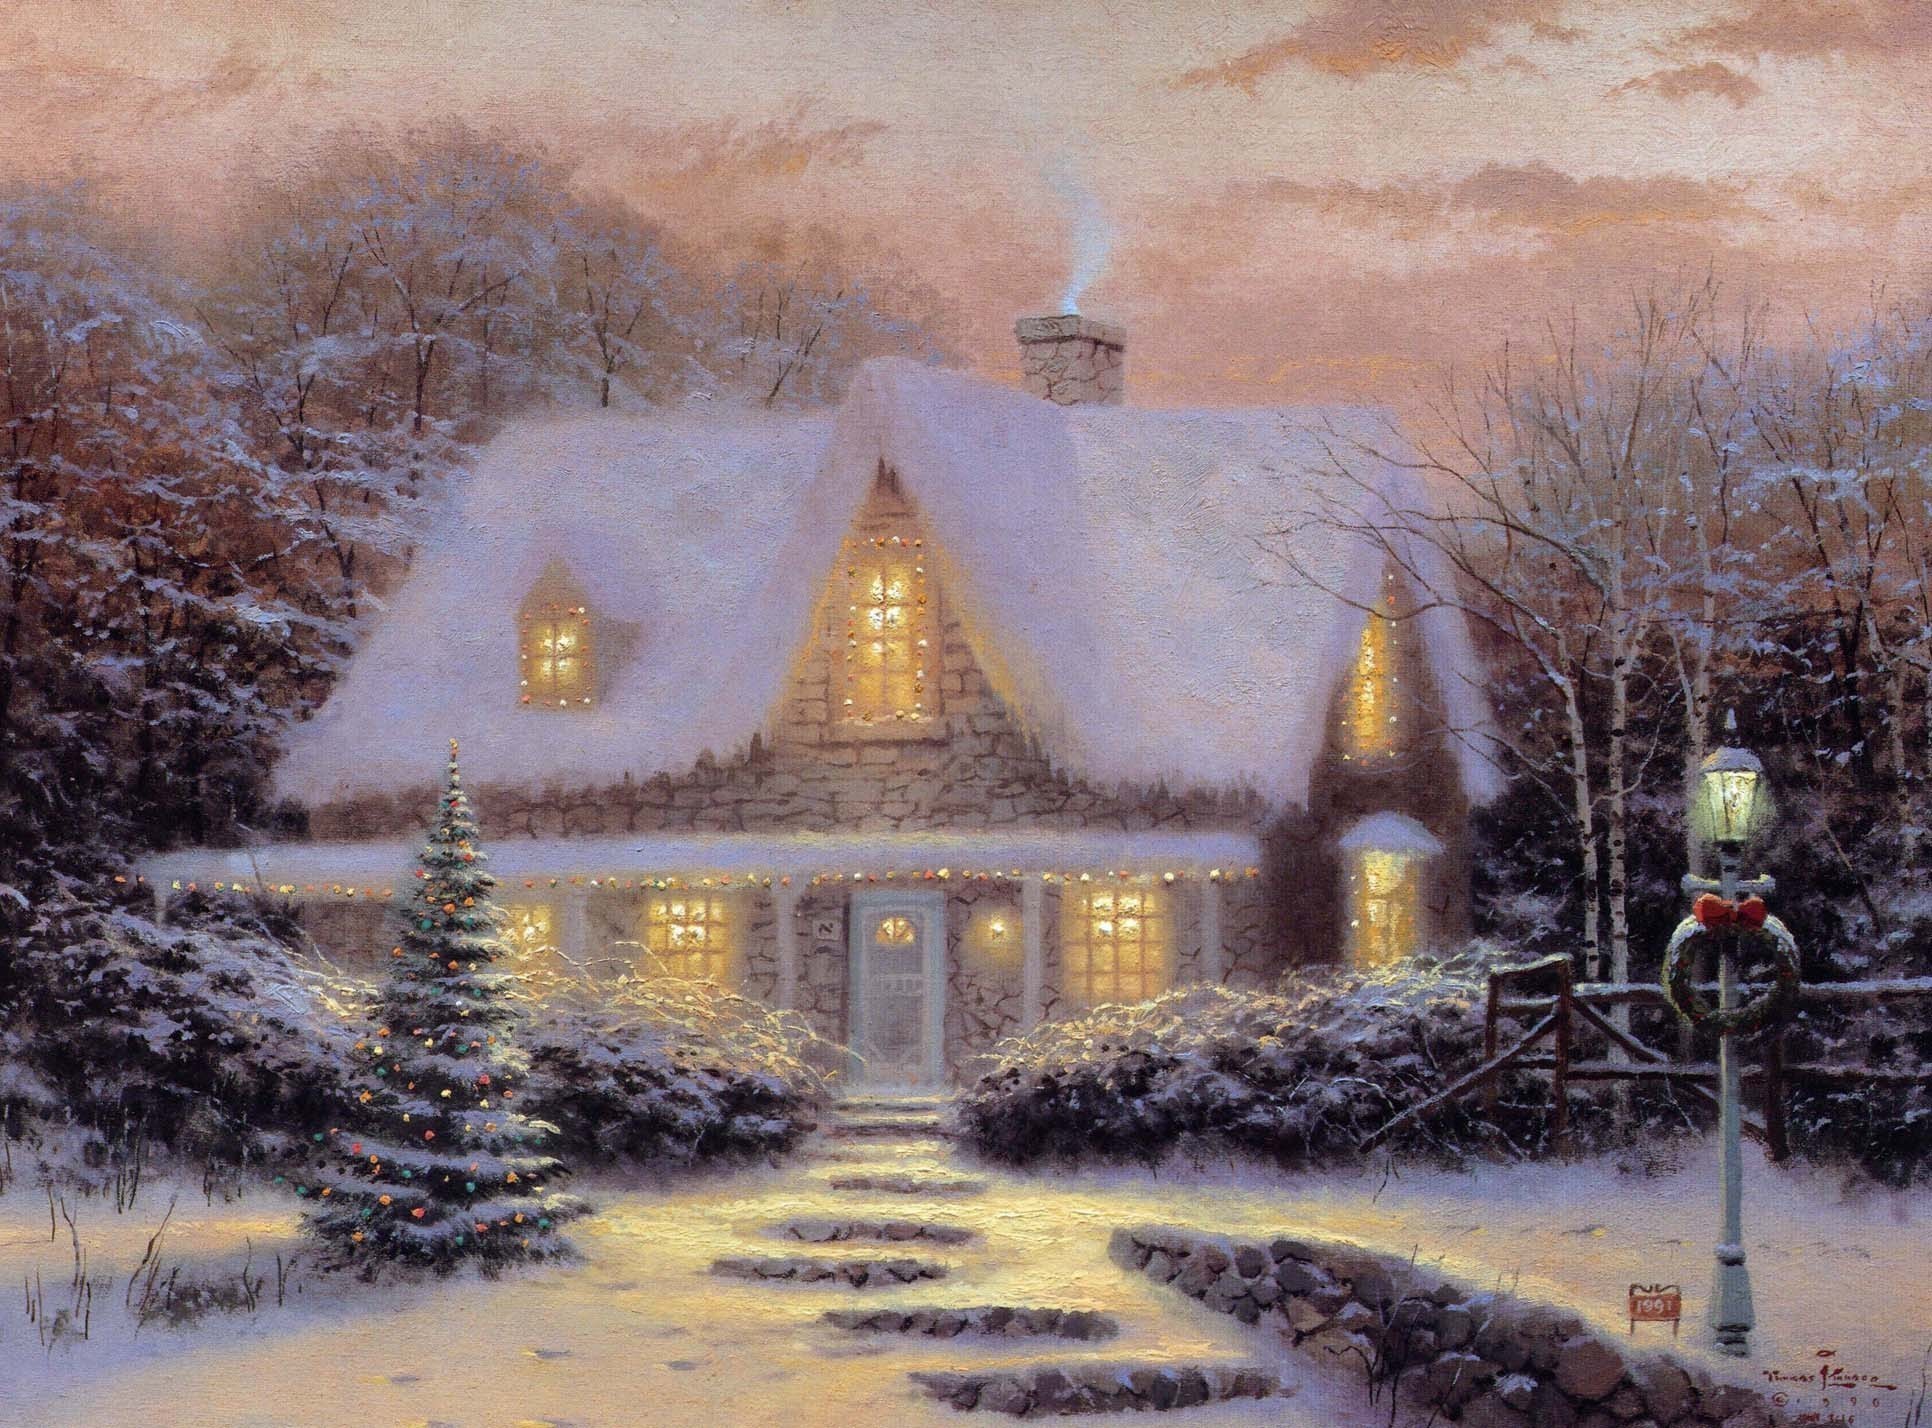 1932x1428 http://images4.fanpop.com/image/photos/23400000/Thomas-Kinkade-Winter-winter-23436581-1932-1428.jpg  | THOMAS KINKADE, PAINTER OF LIGHT | Pinterest ...